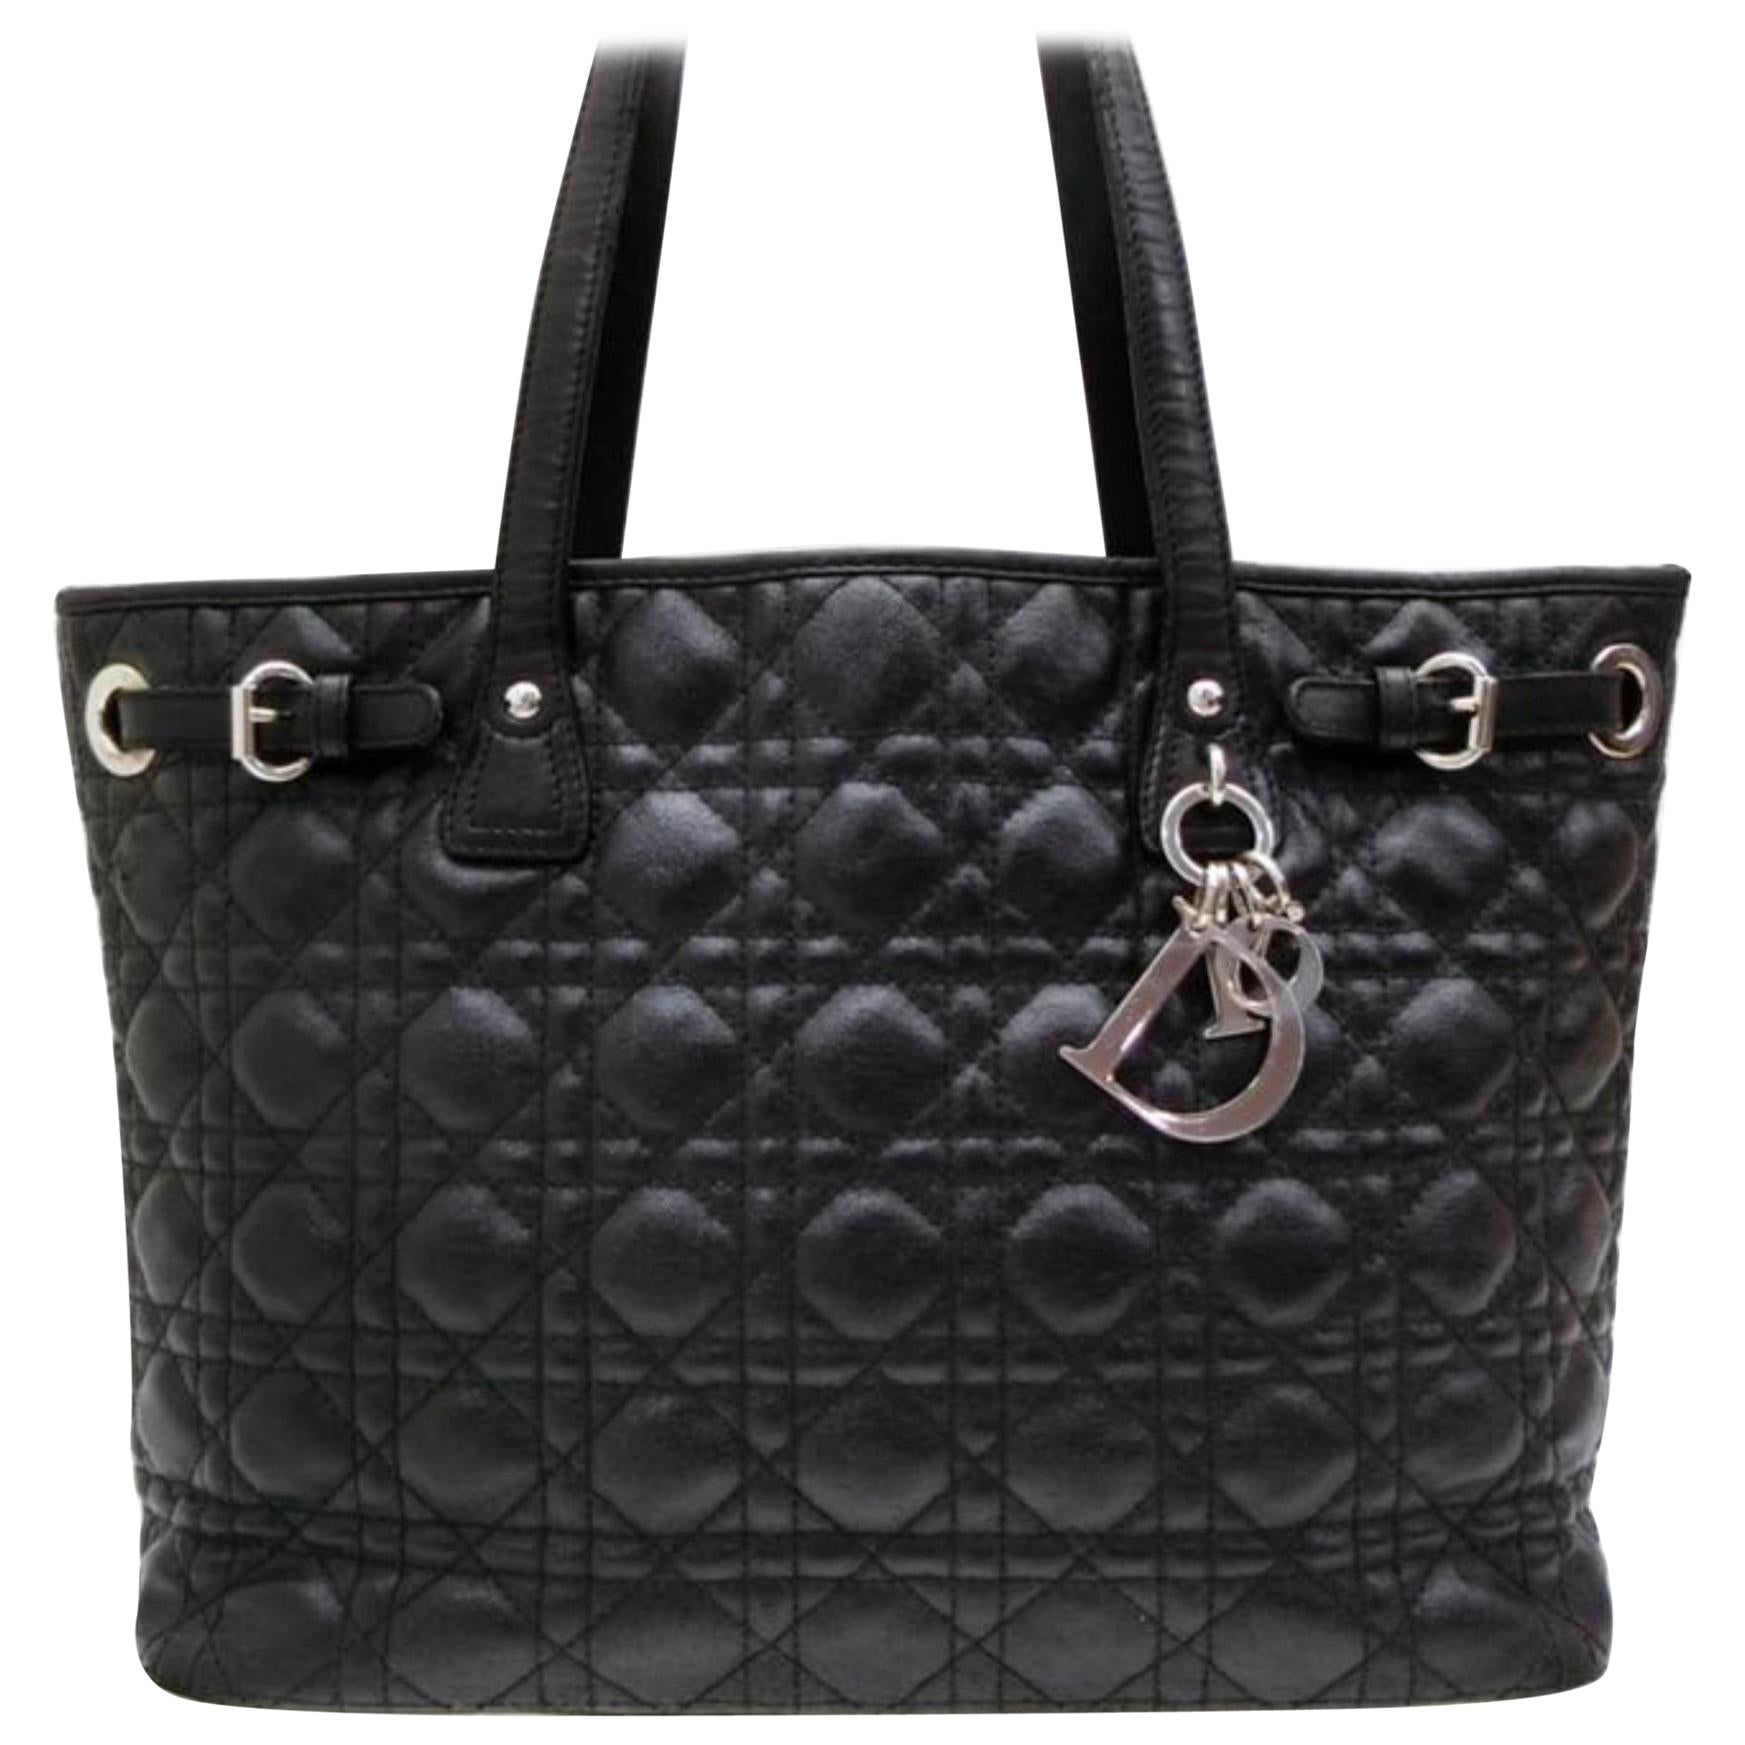 Dior Quilted Leather Cannage Shopper Tote 233793 Black Canvas Shoulder Bag For Sale